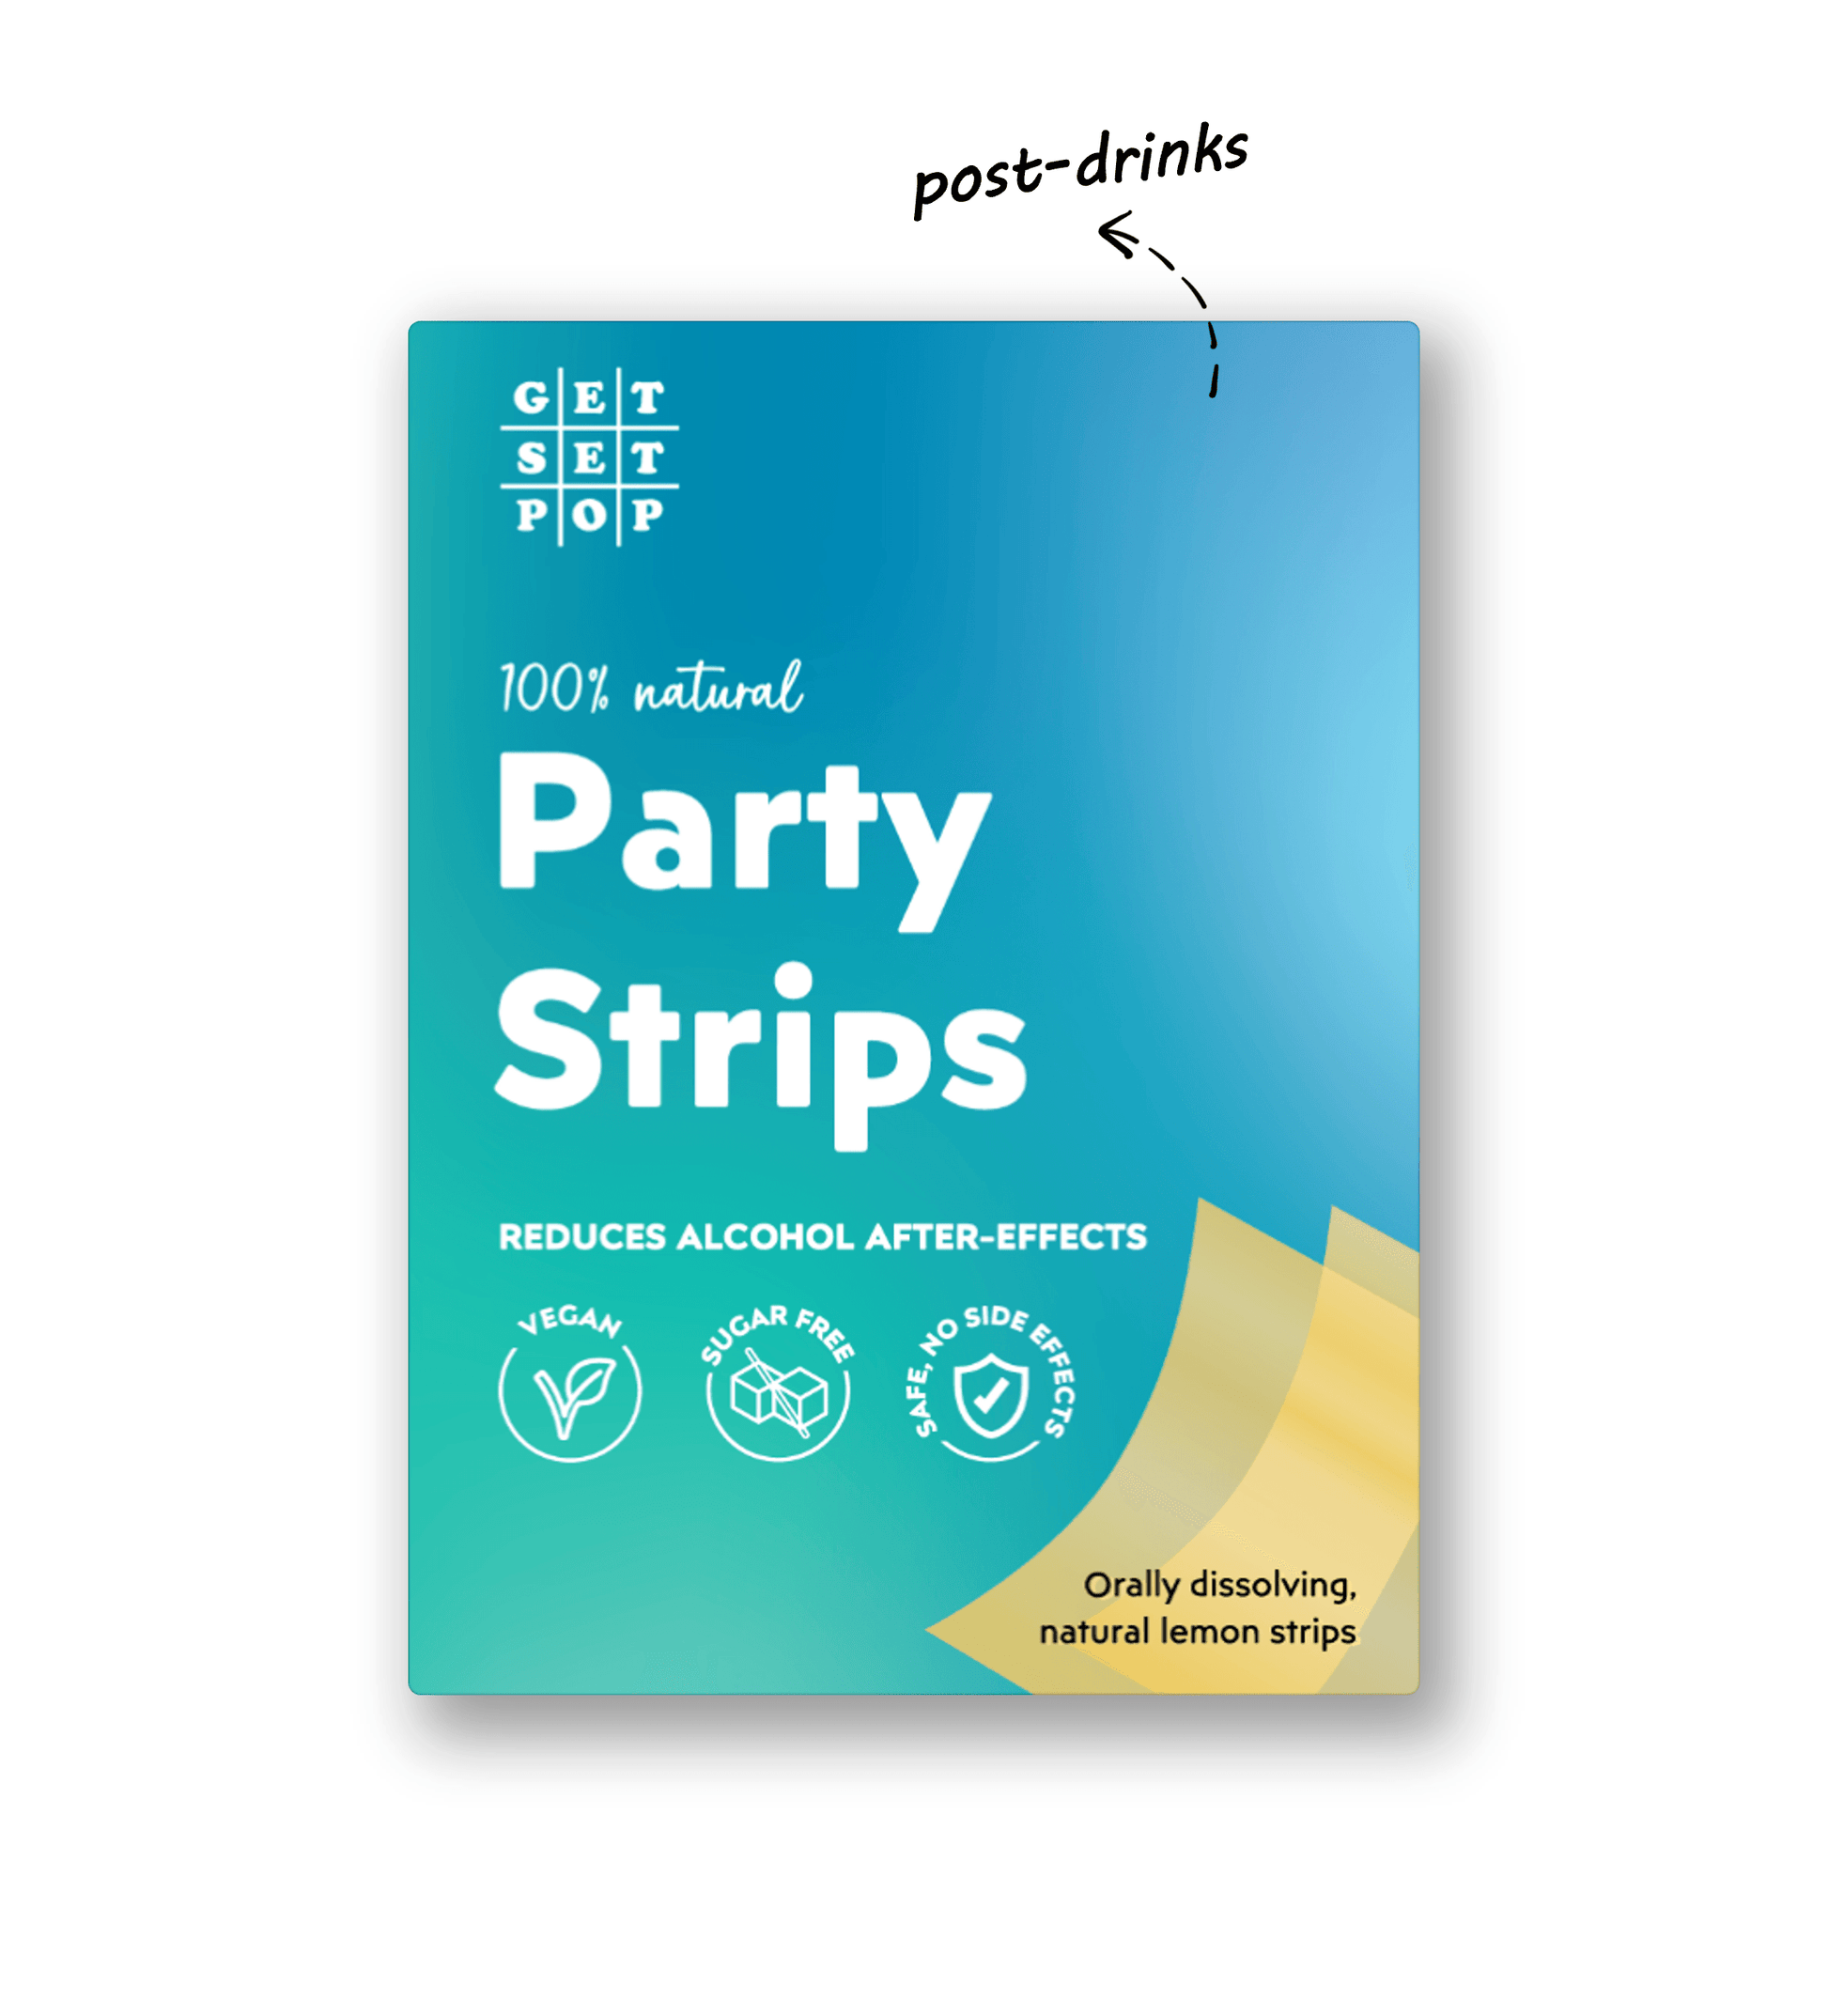 GetSetPop Party Strips - GetSetPop